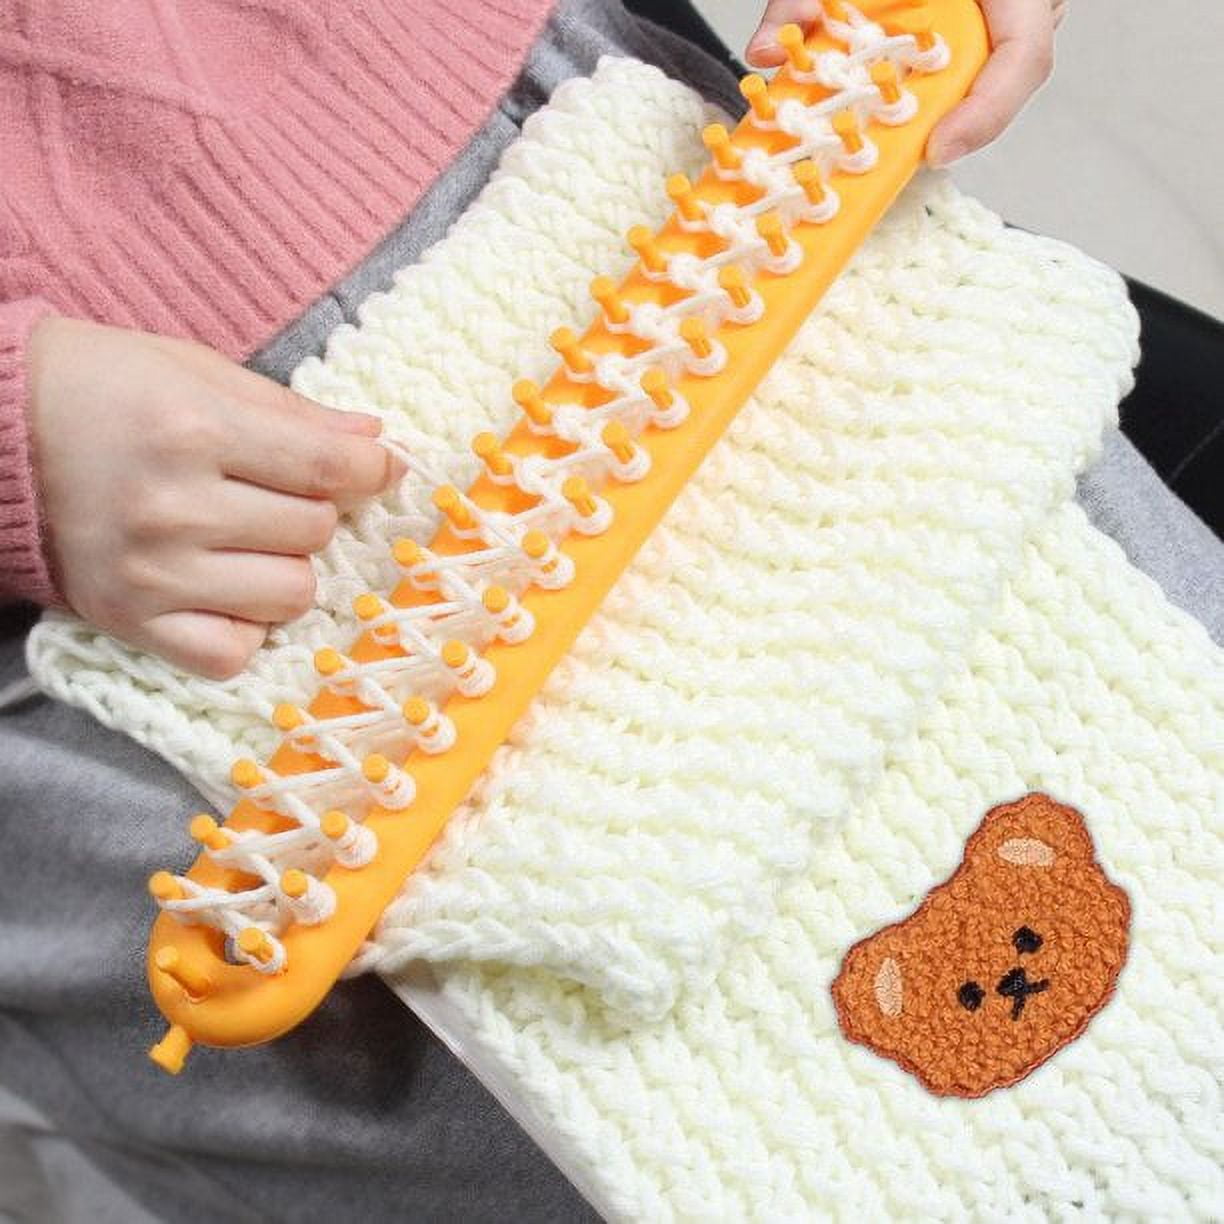 Loom Knitting Blankets Guide + 10 Pattern Ideas — Blog.NobleKnits  Loom  knitting blanket, Loom knitting tutorial, Loom knitting projects